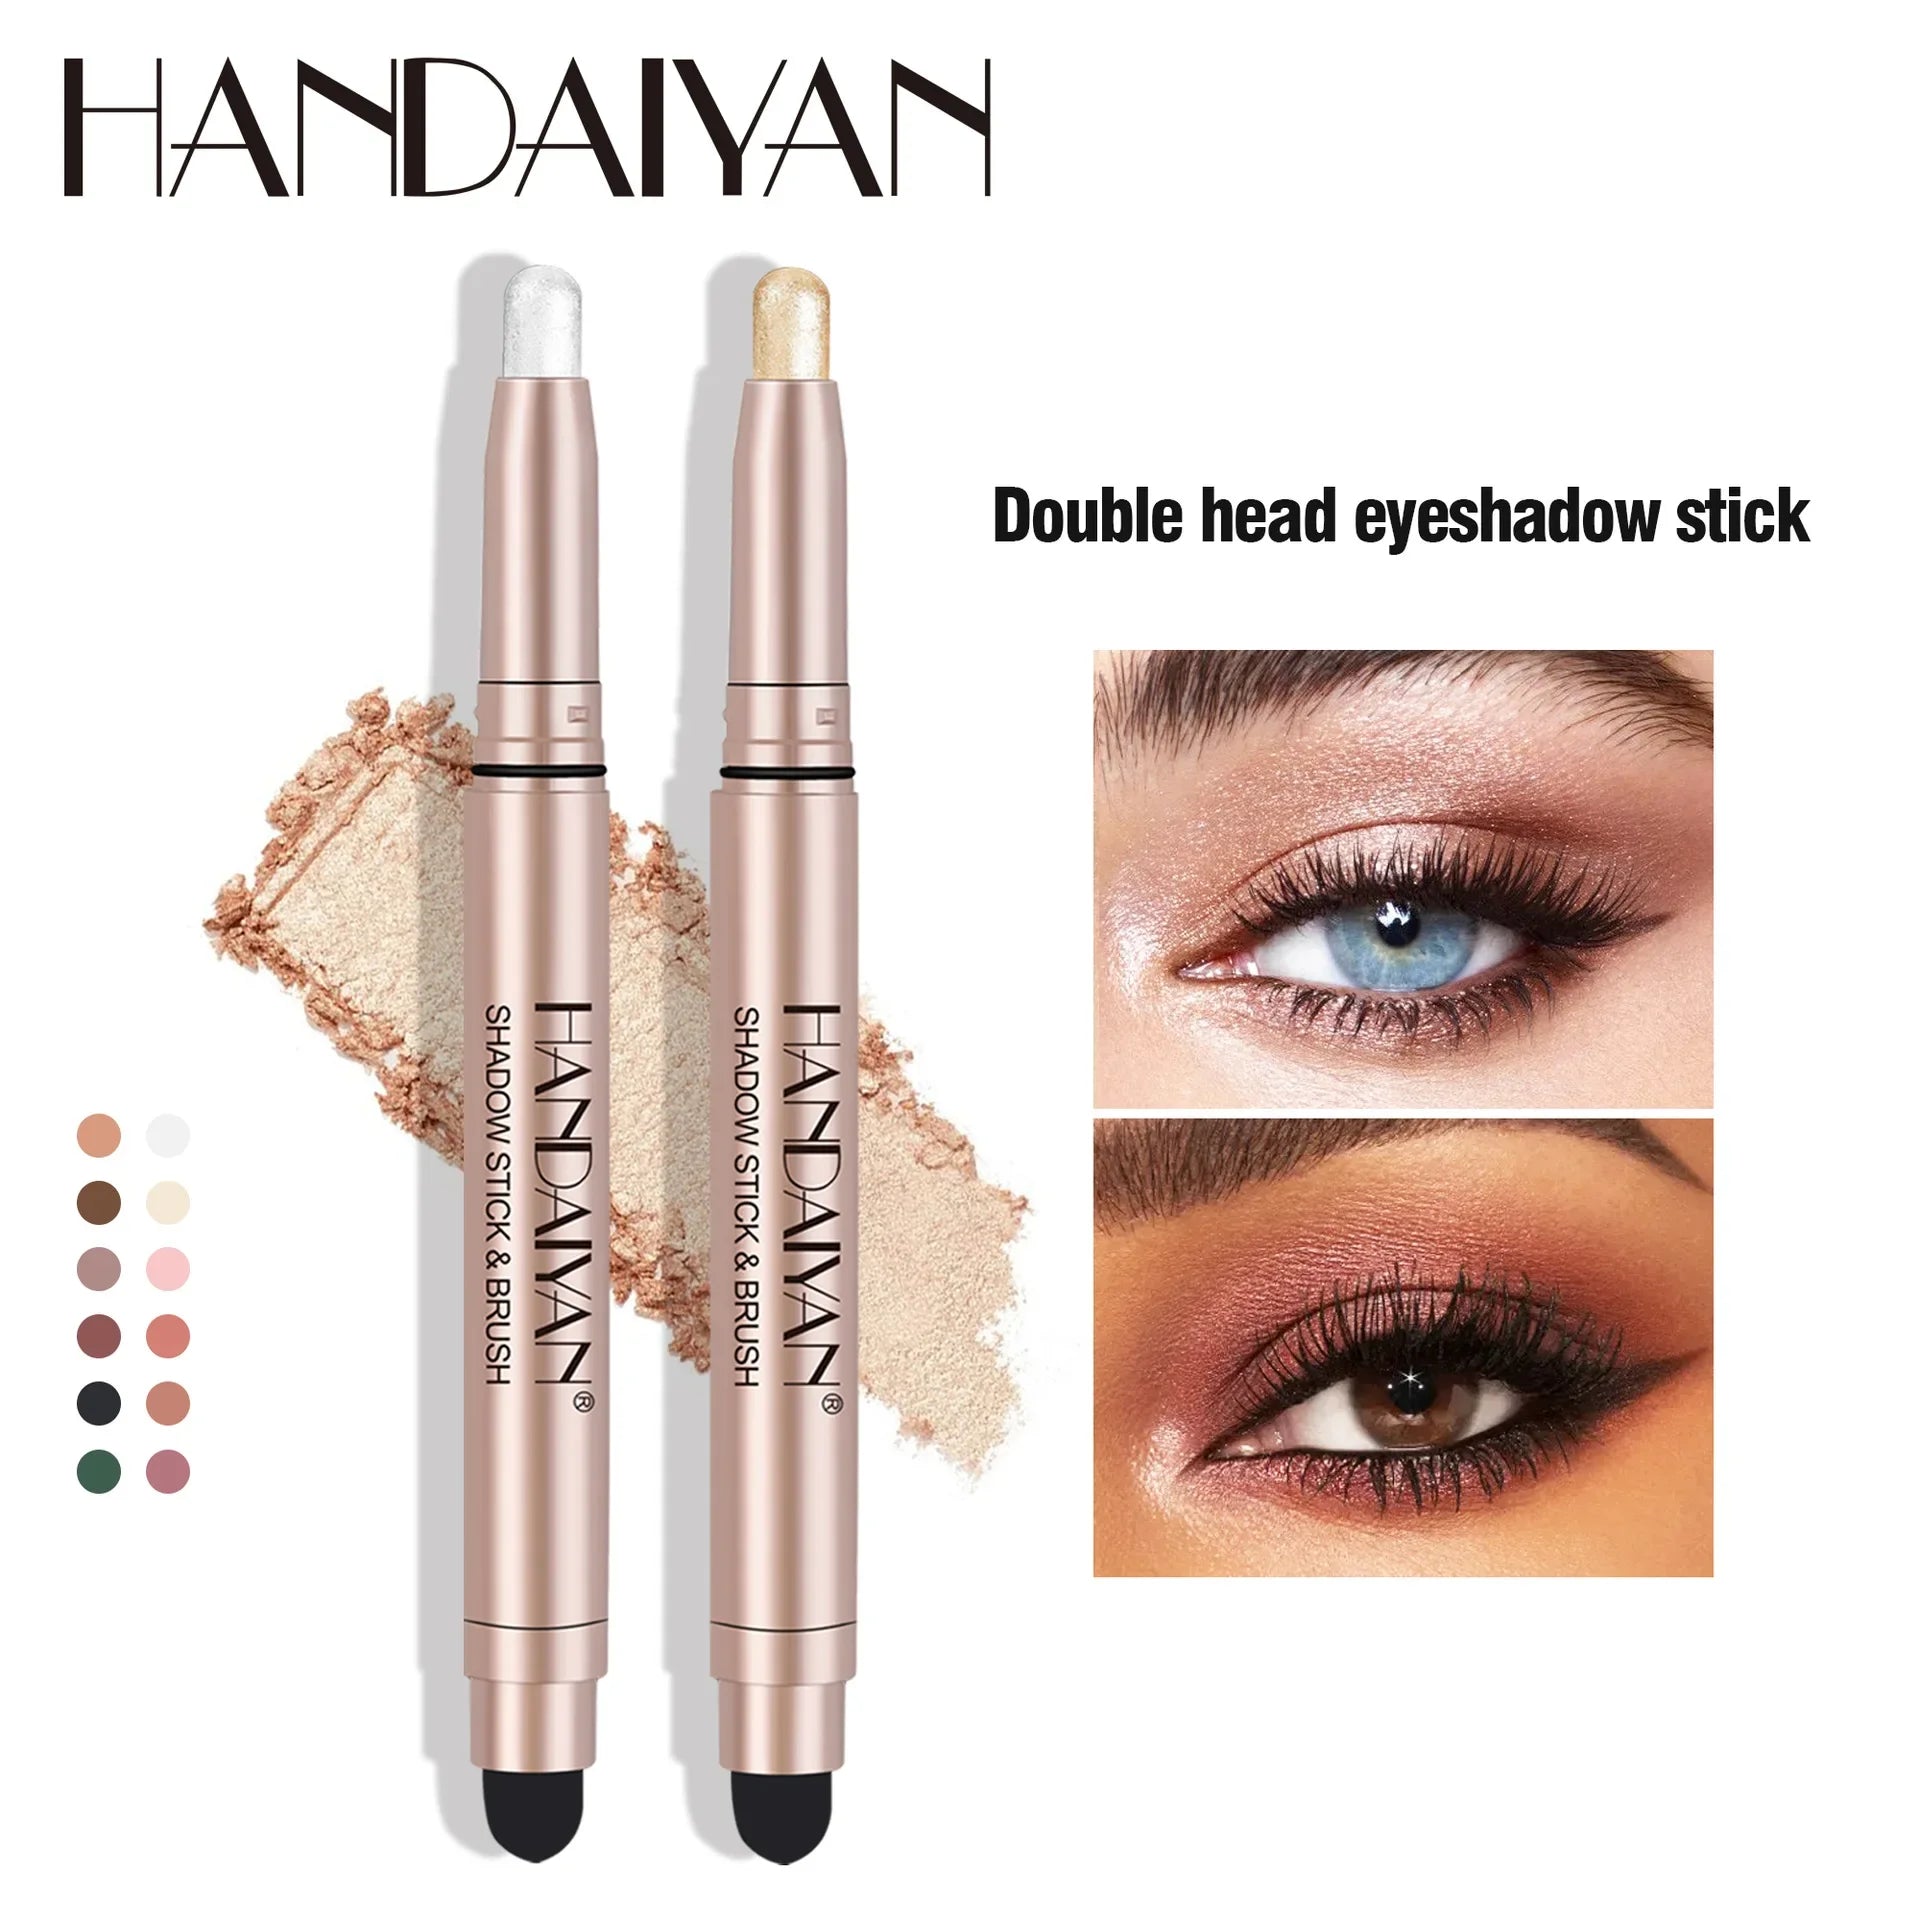 HANDAIYAN 12 Color Double Head Eye Shadow Stick Glitter Shimmer Matte EyeShadow Waterproof Lasting New Popular High Gloss Makeup